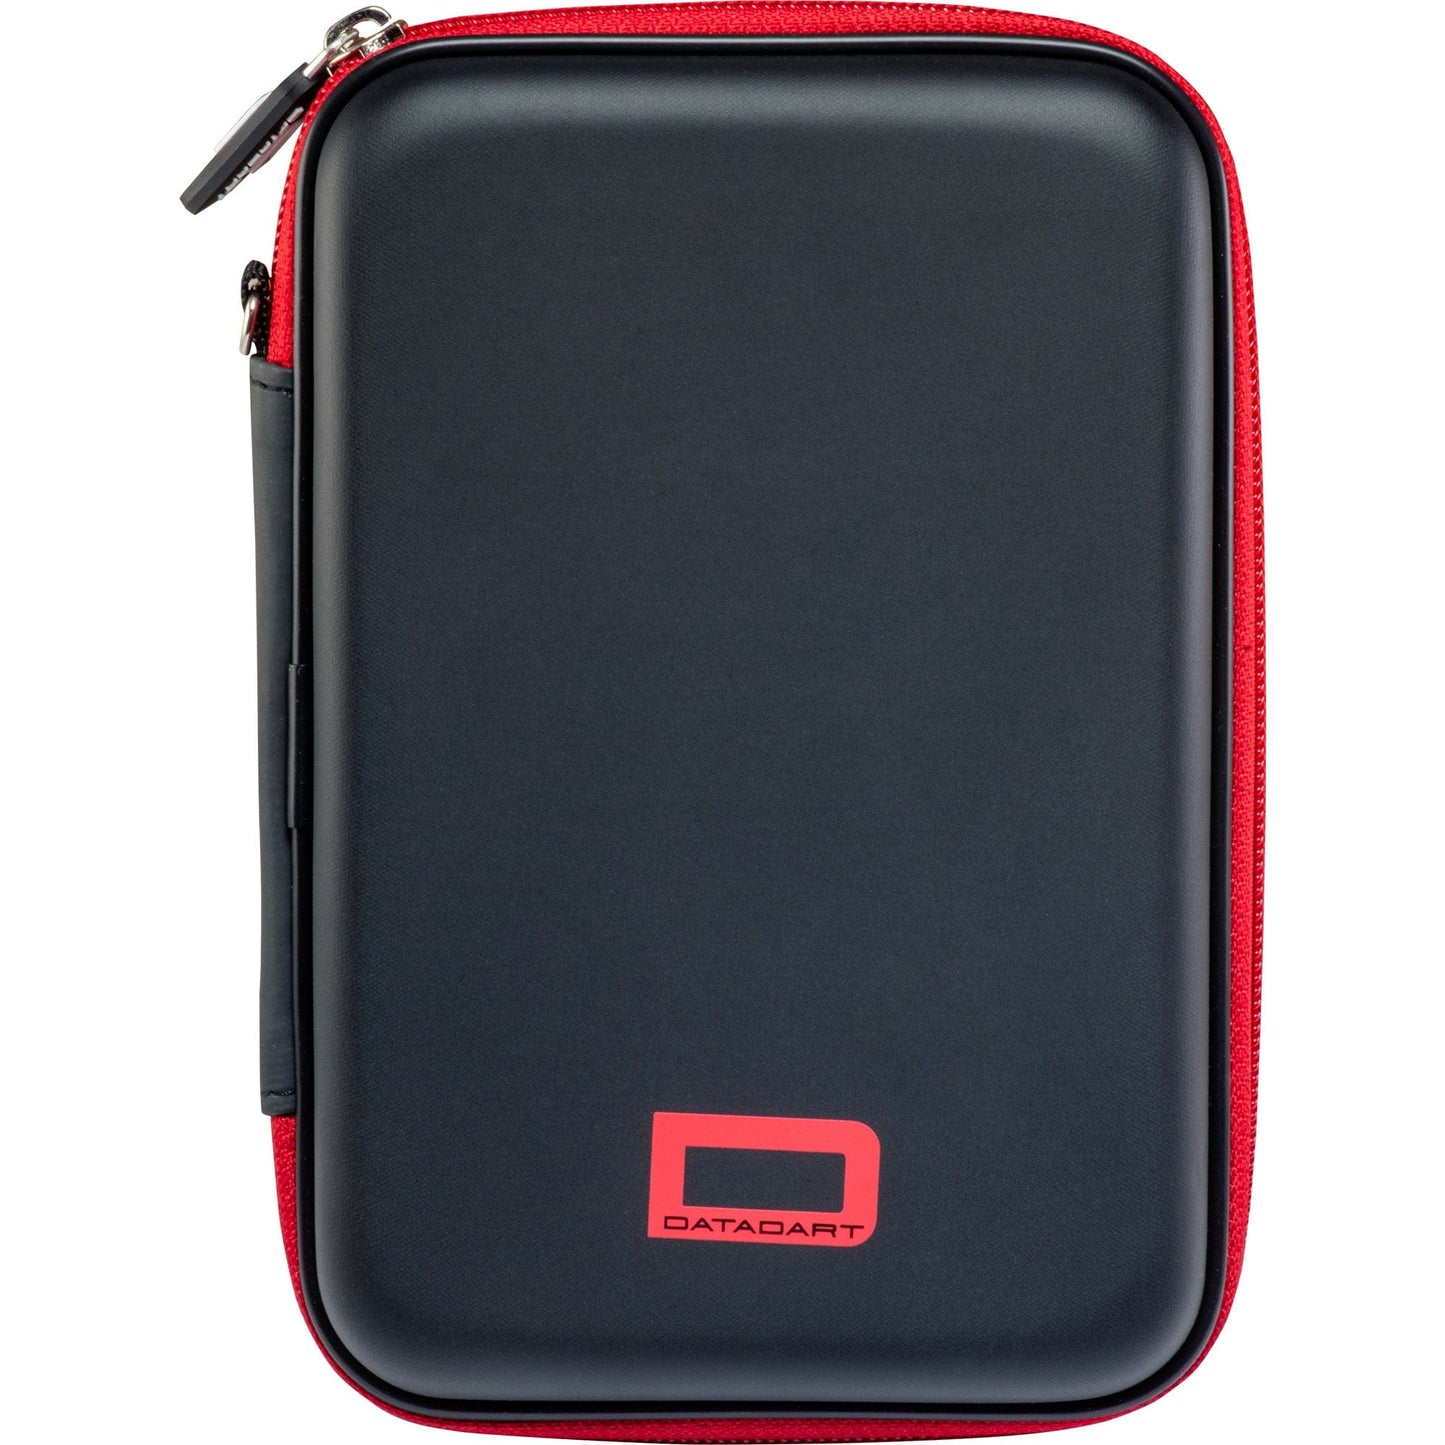 Datadart ProPac MAX Darts Case - Large EVA Case - Holds 2 Fully Assembled Sets Red